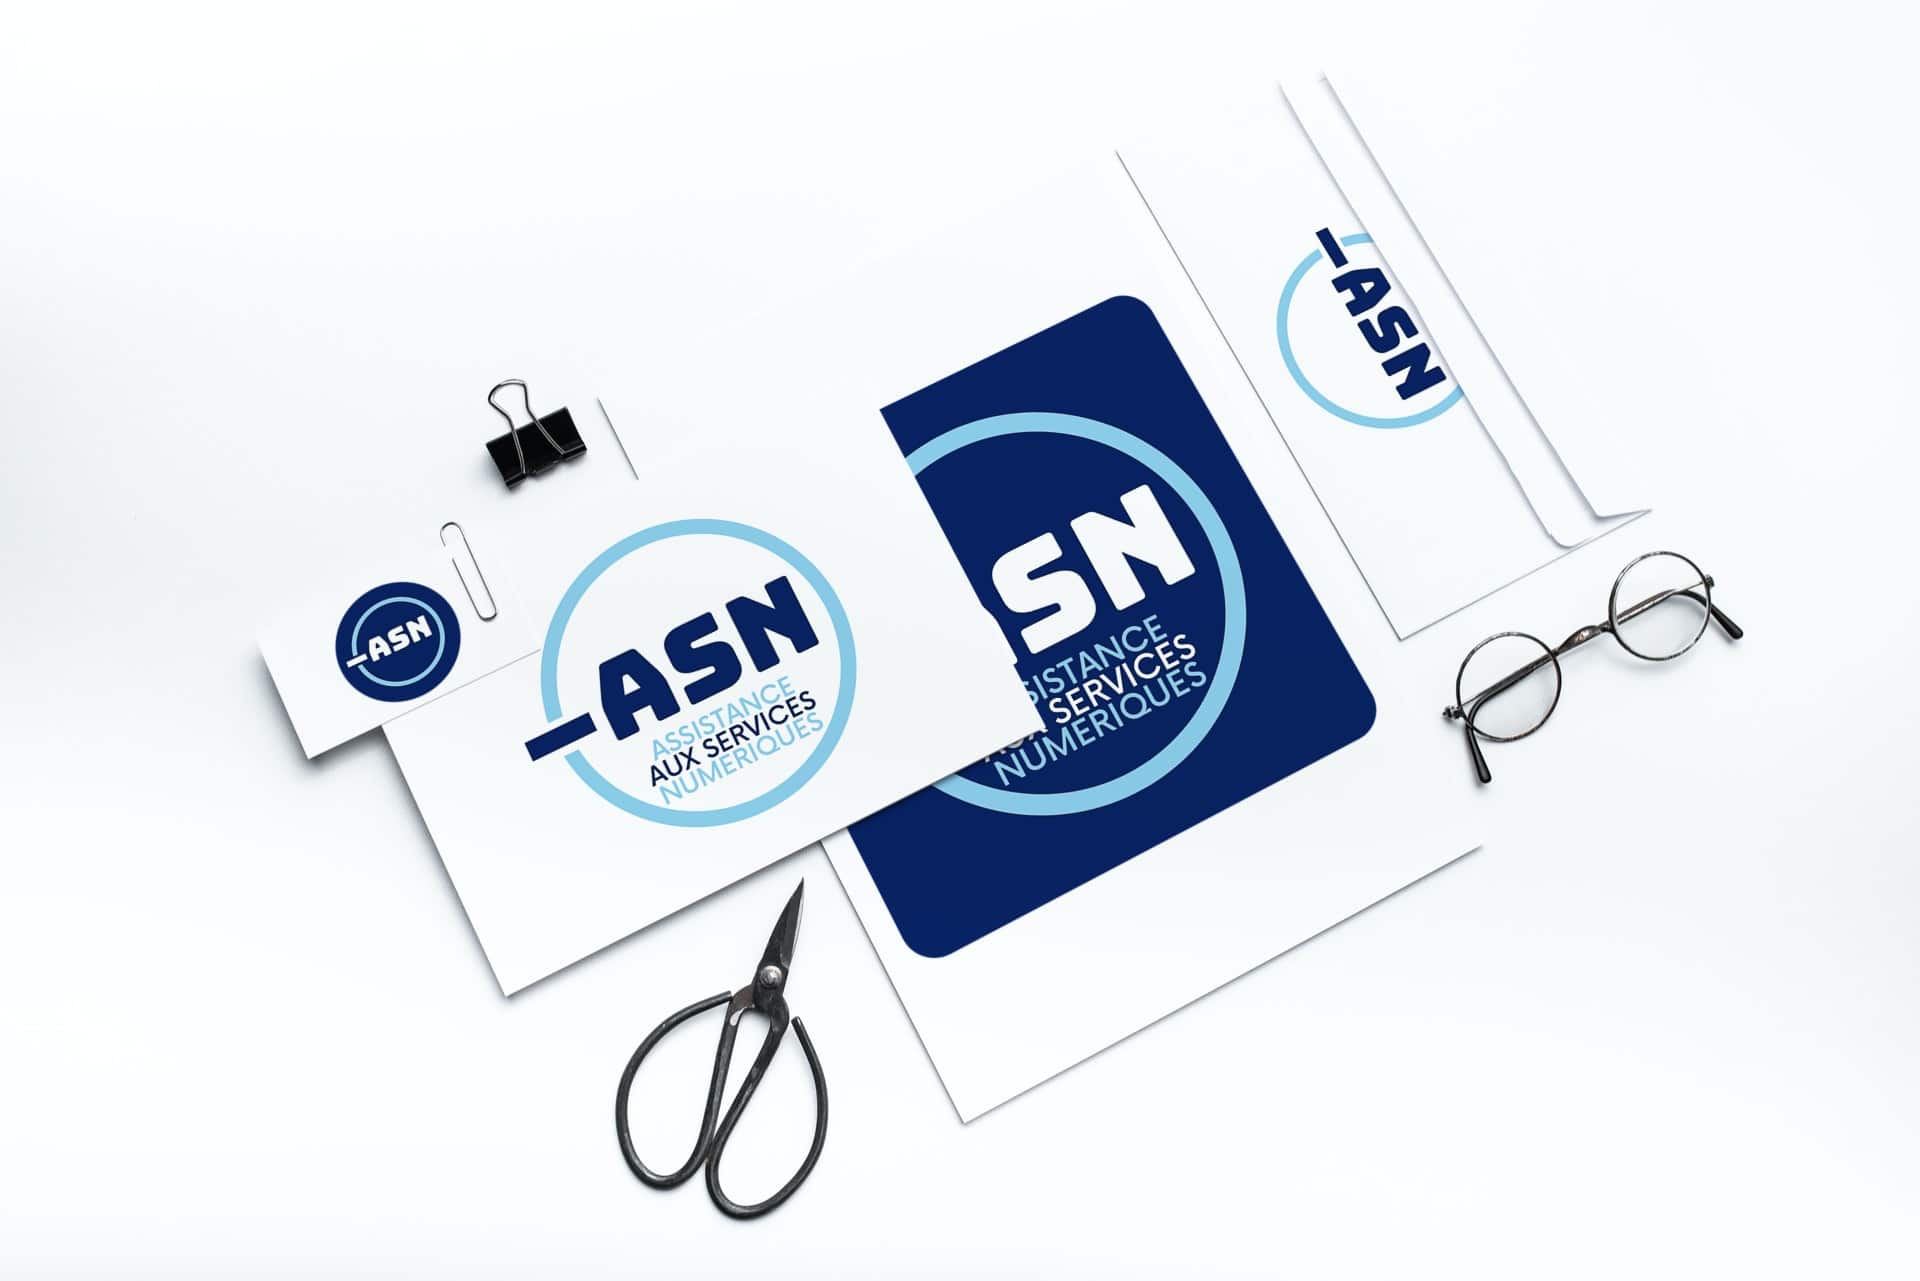 logo ASN